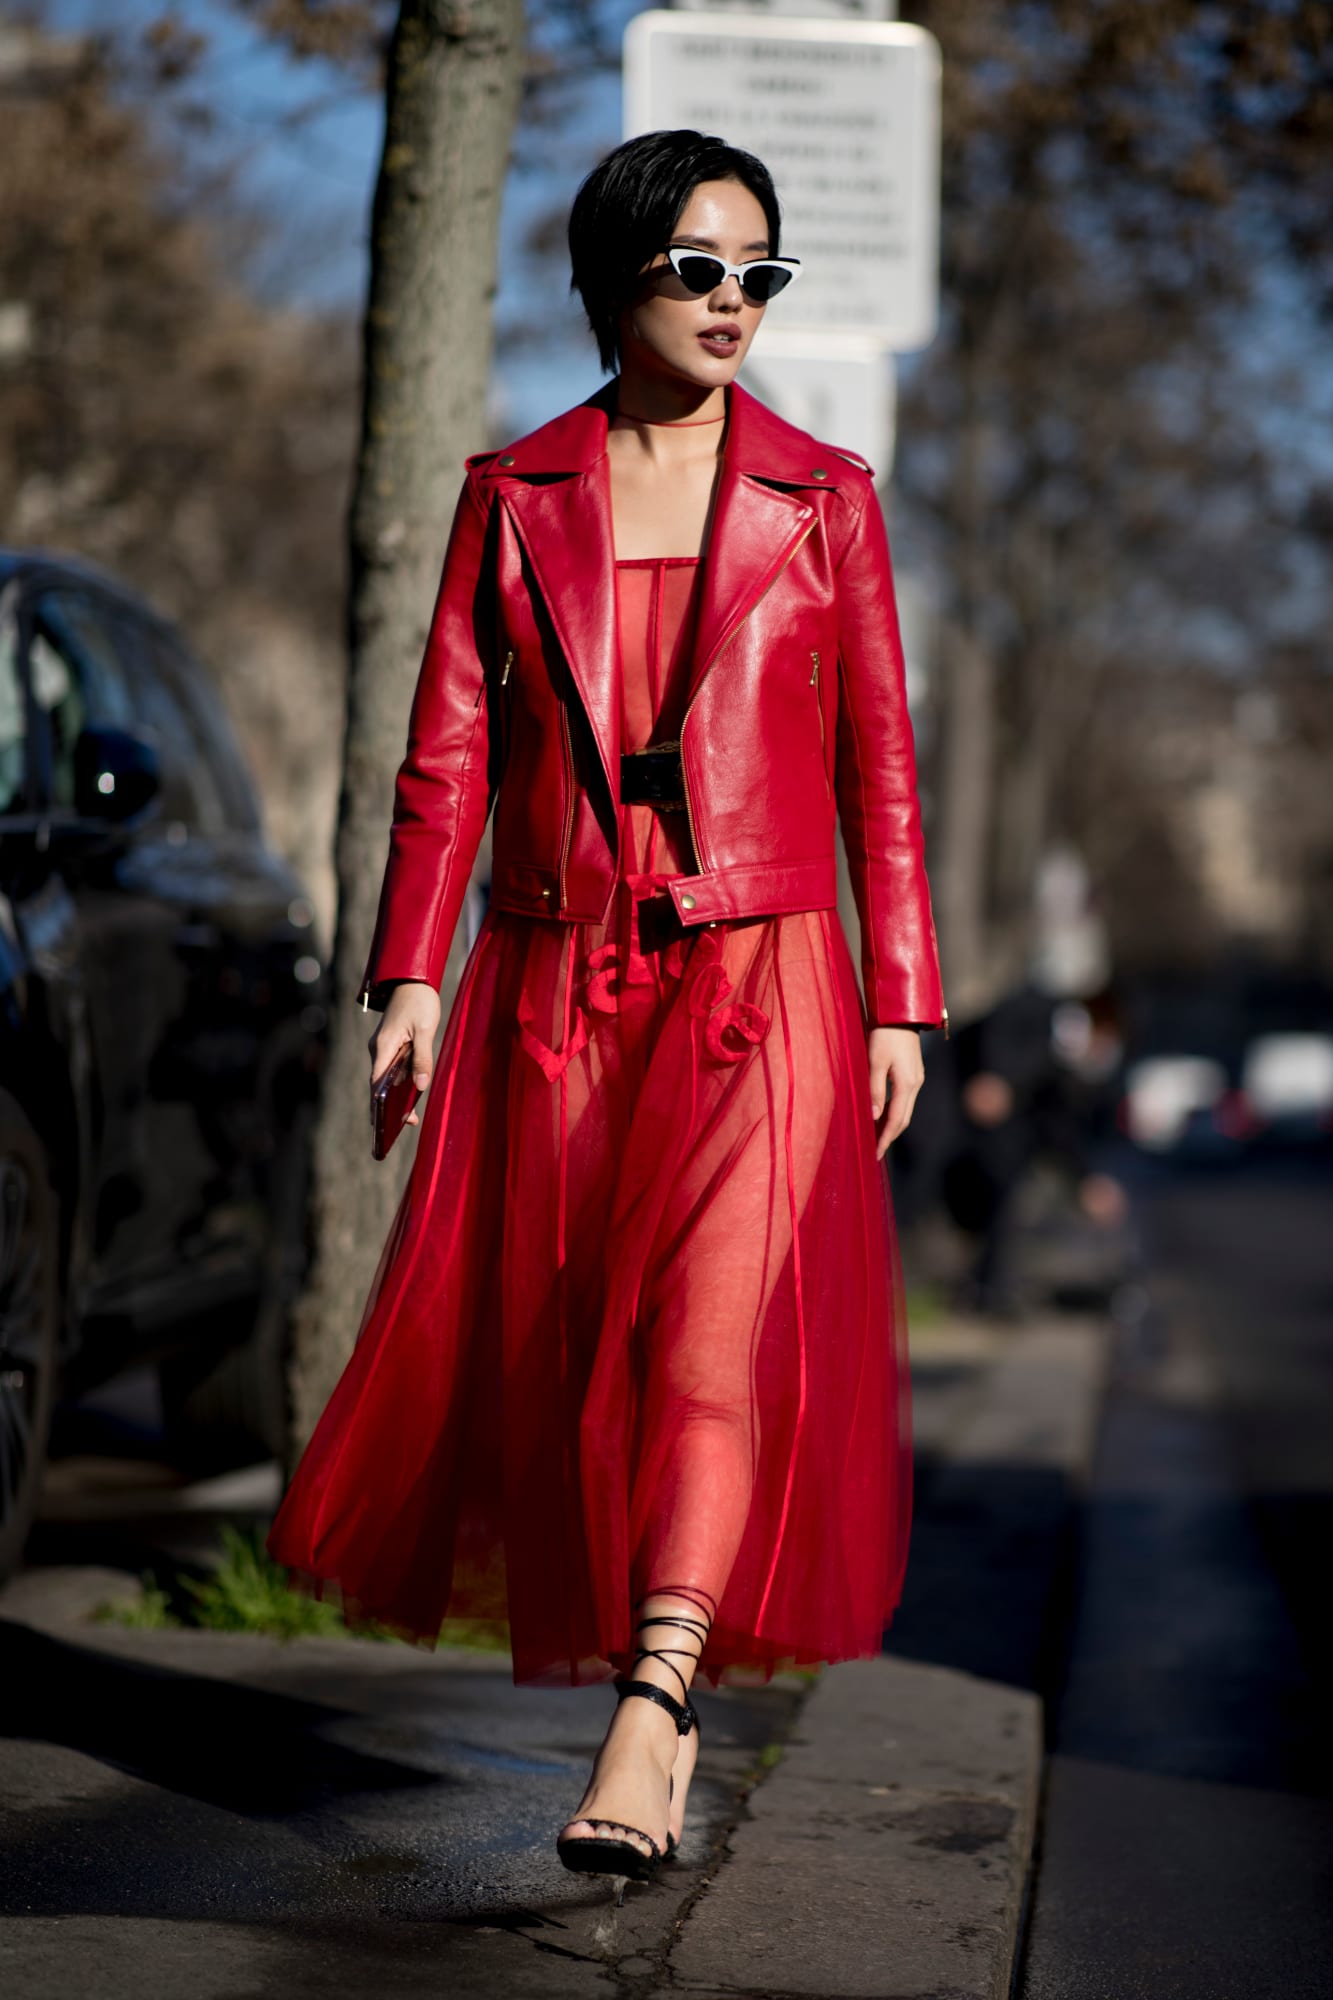 Paris Fashion Week street fashion 2019